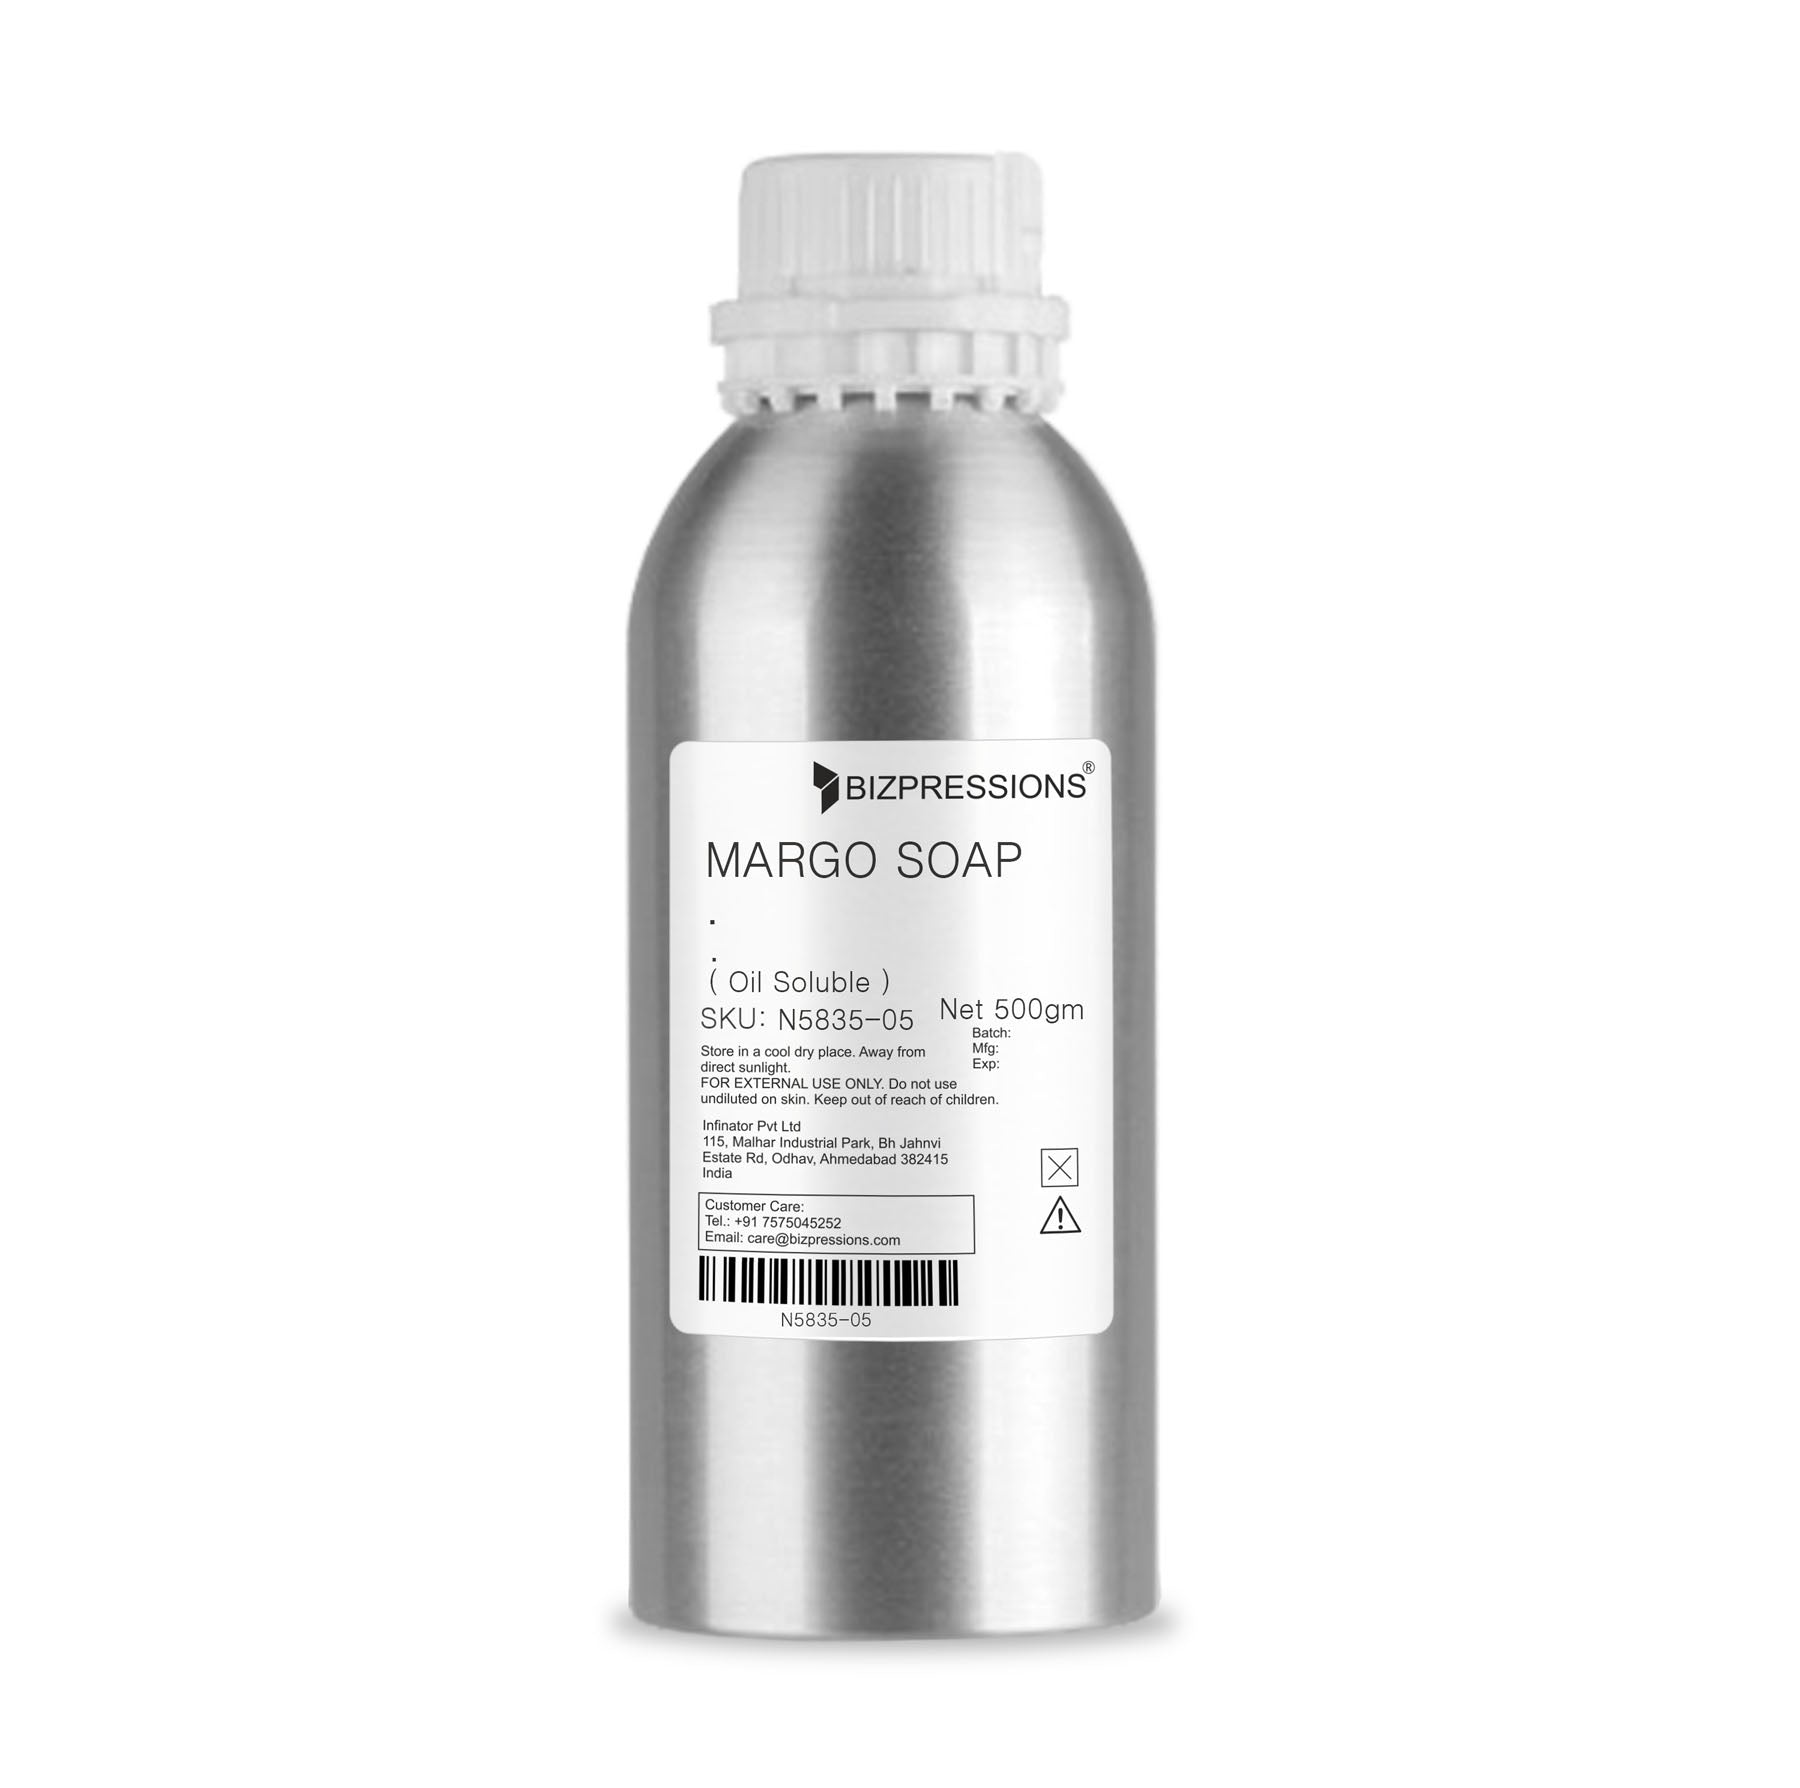 MARGO SOAP - Fragrance ( Oil Soluble ) - 500 gm